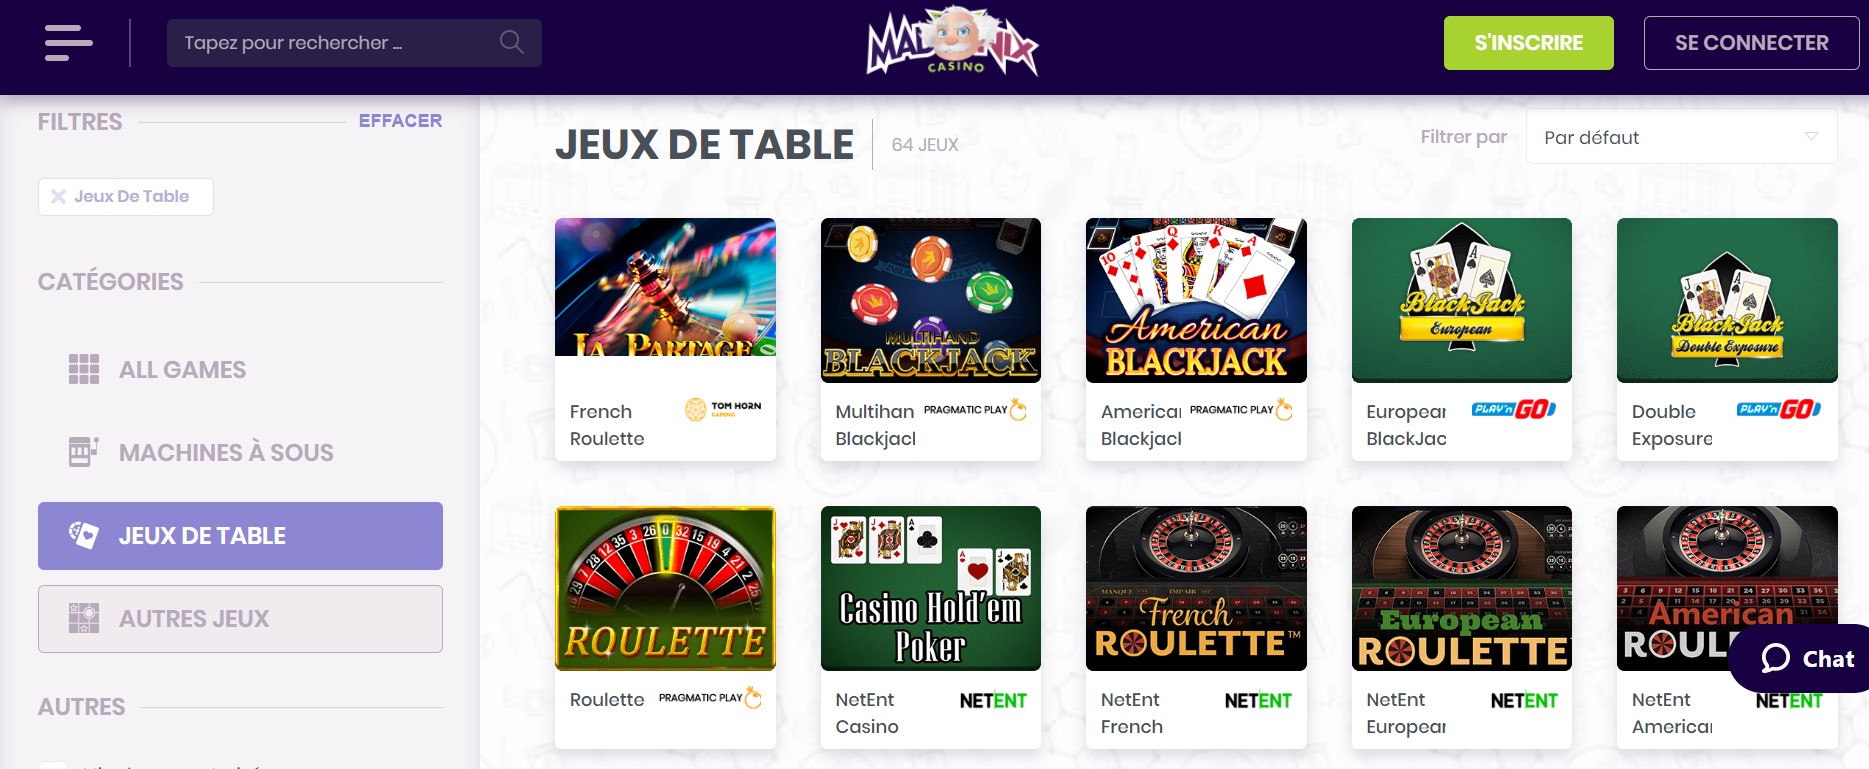 Avis Madnix casino : Jeux de table